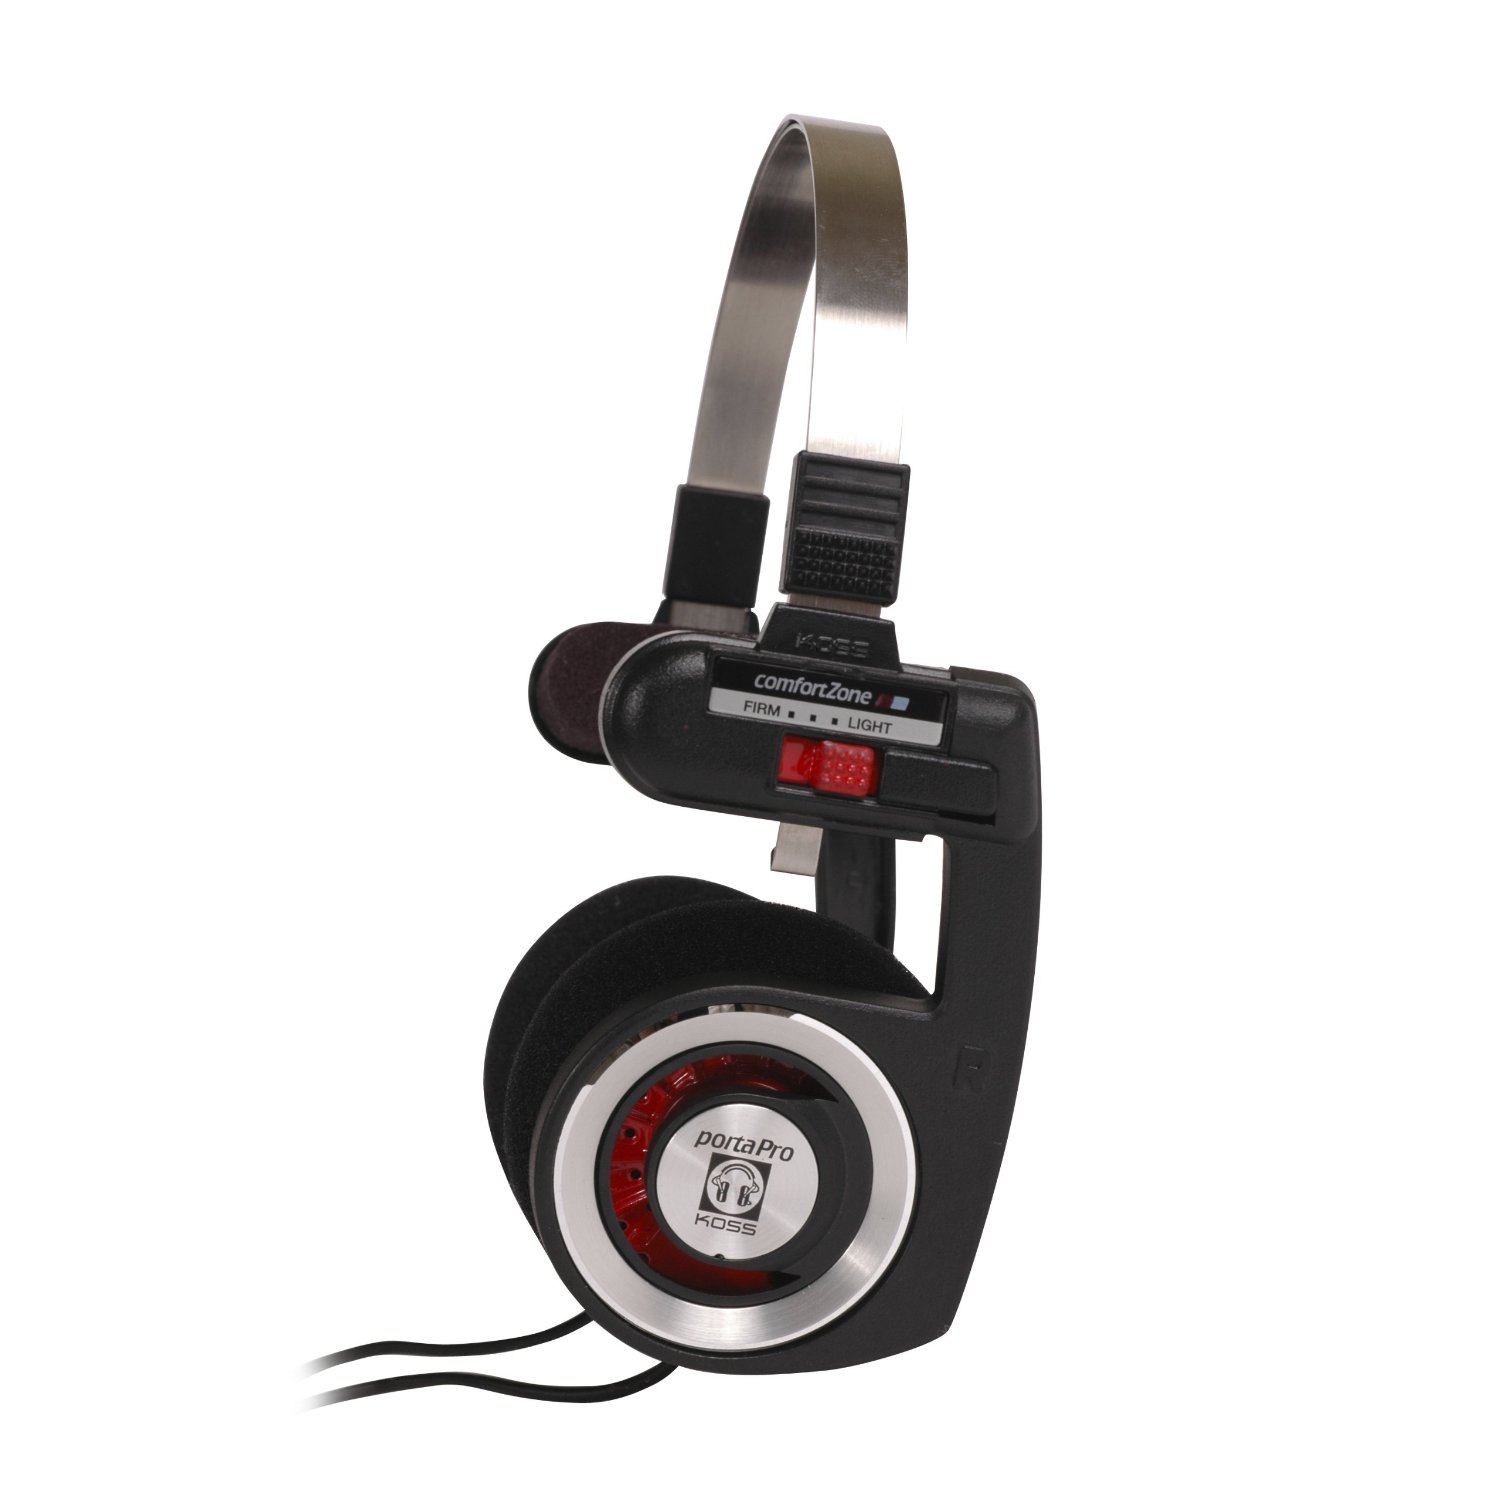 Koss Porta Pro On-Ear Stereo Headphones - Red Hot